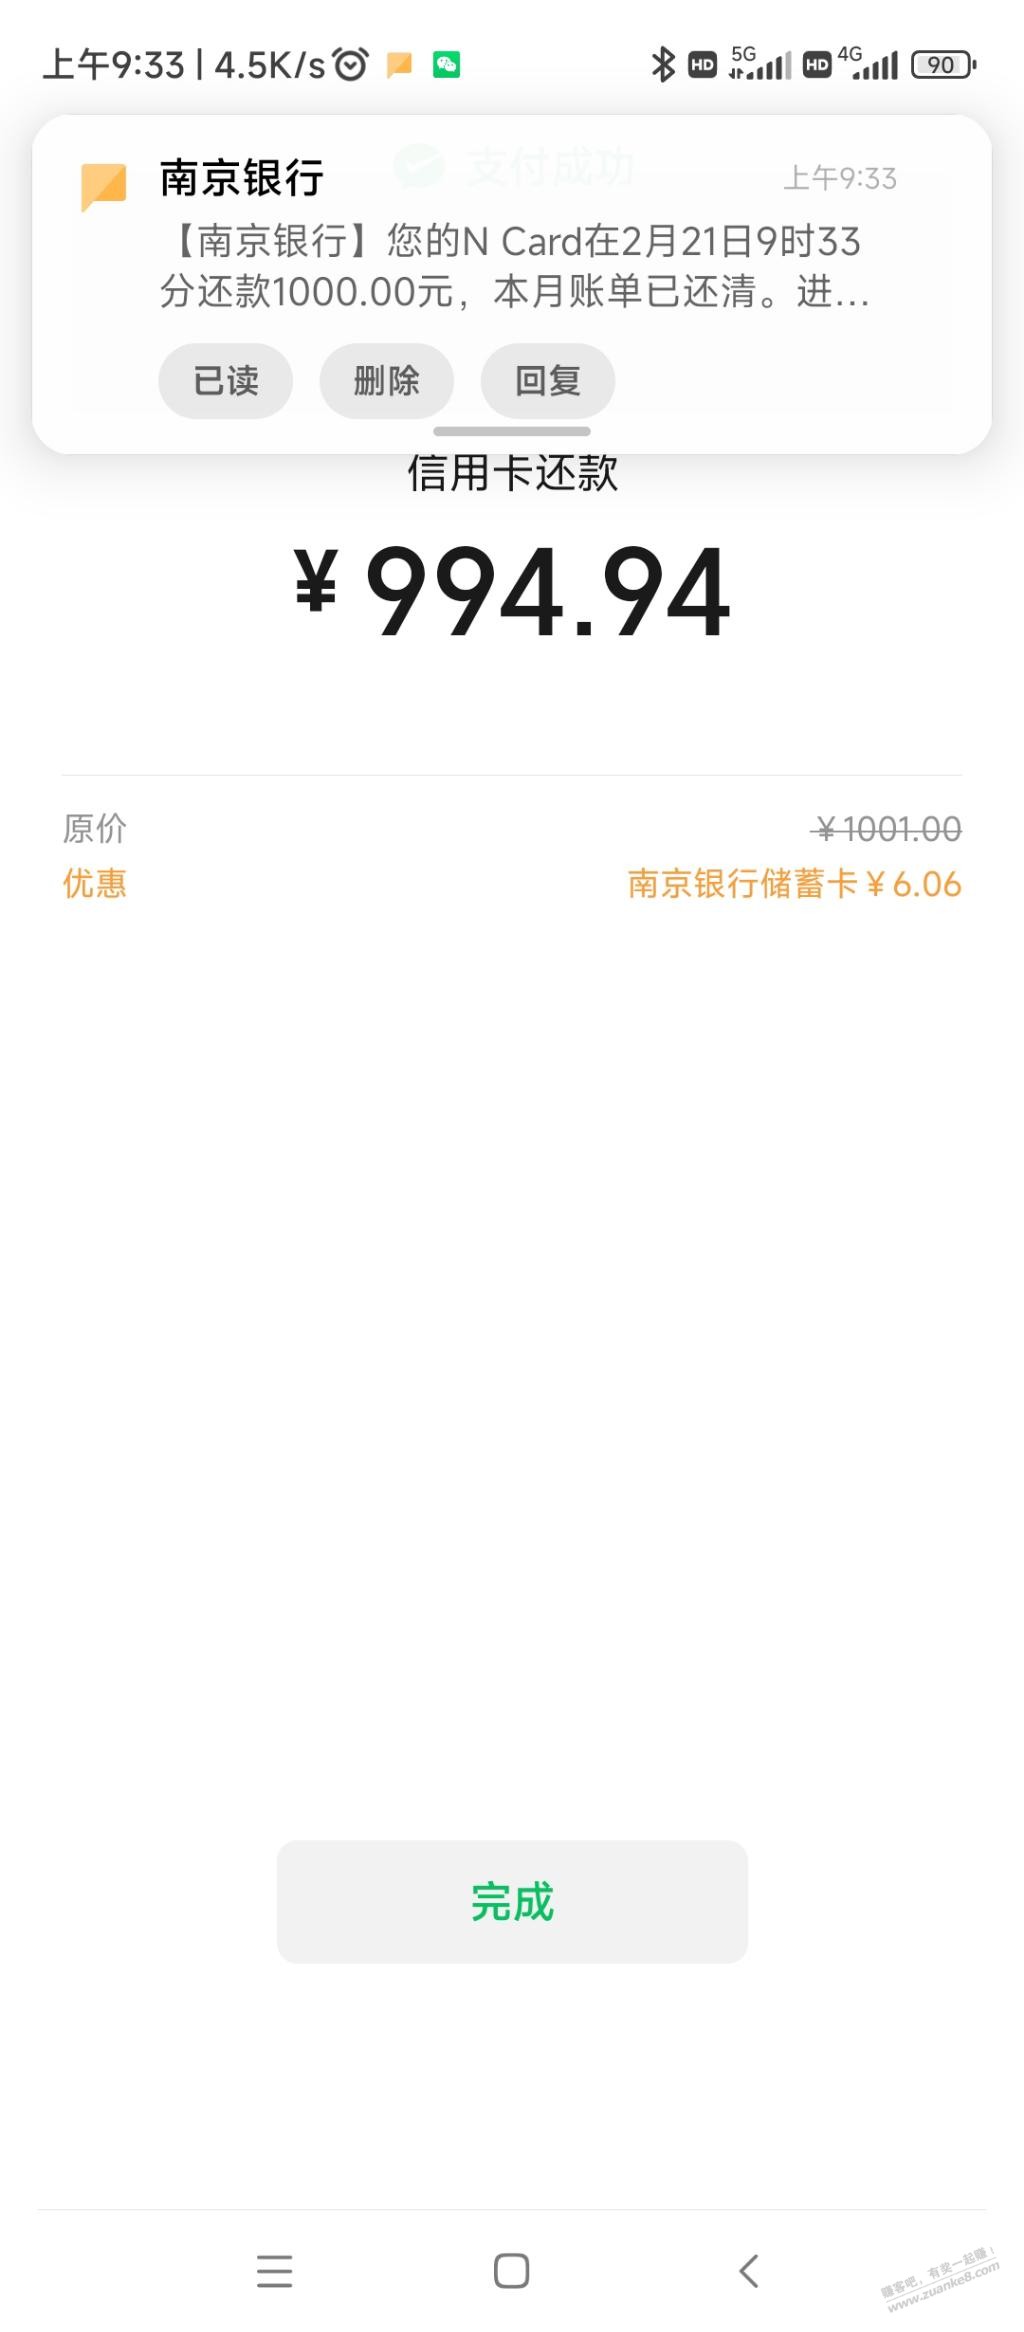 V.x-南京银行储蓄卡-还款1000随机减-惠小助(52huixz.com)